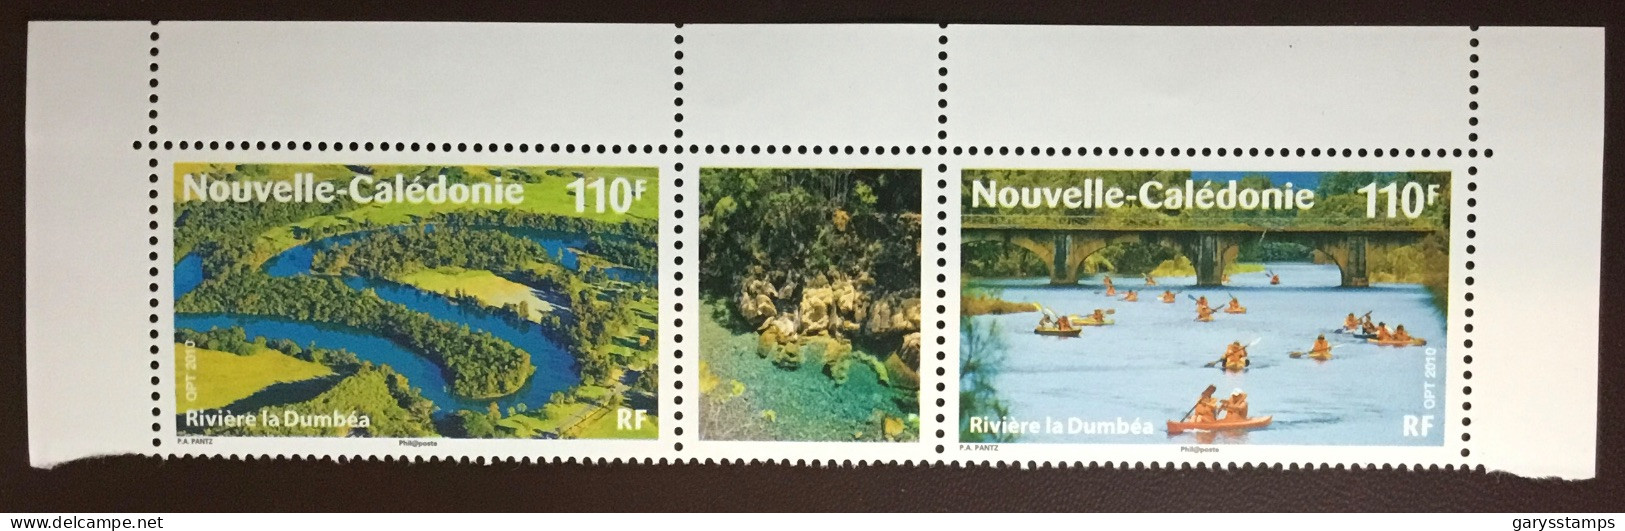 New Caledonia Caledonie 2010 Tourism Dumbea River MNH - Unused Stamps